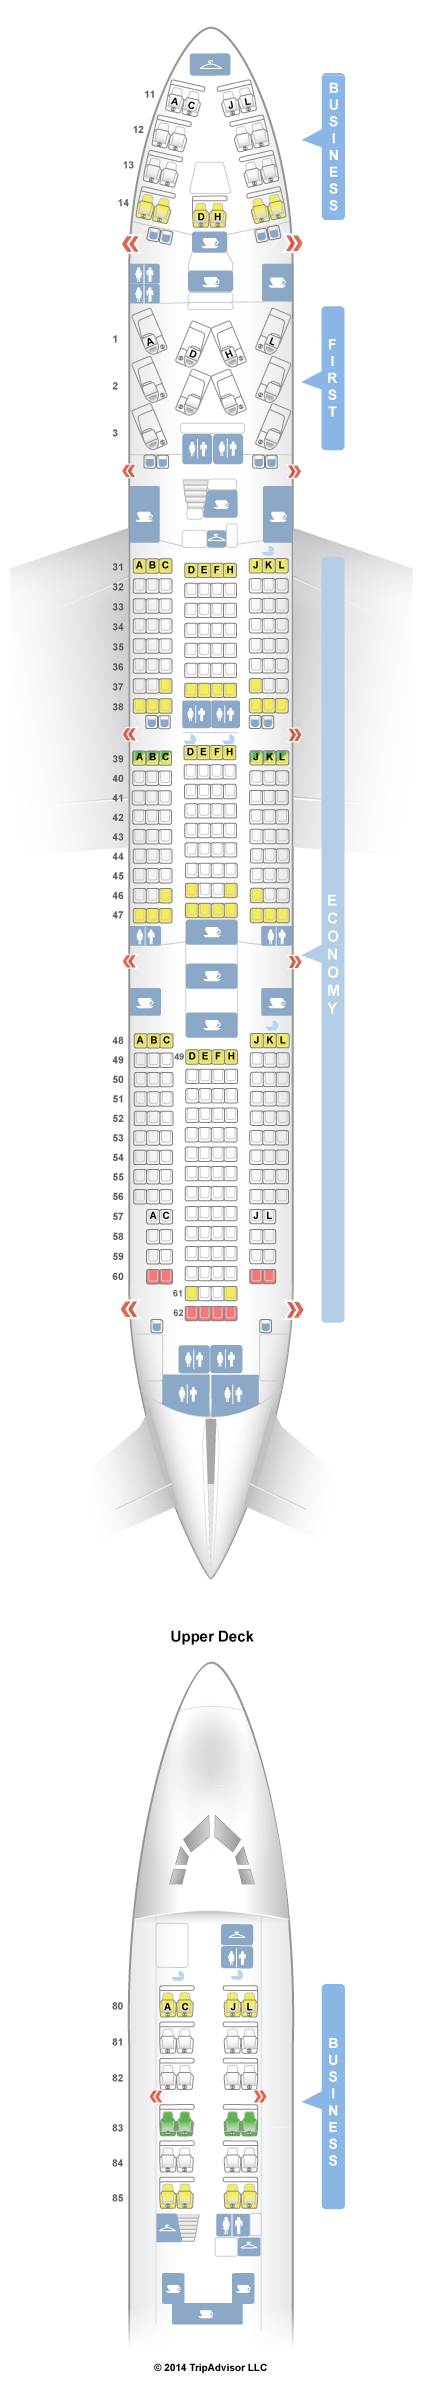 Air China Boeing 747 400 Seating Chart